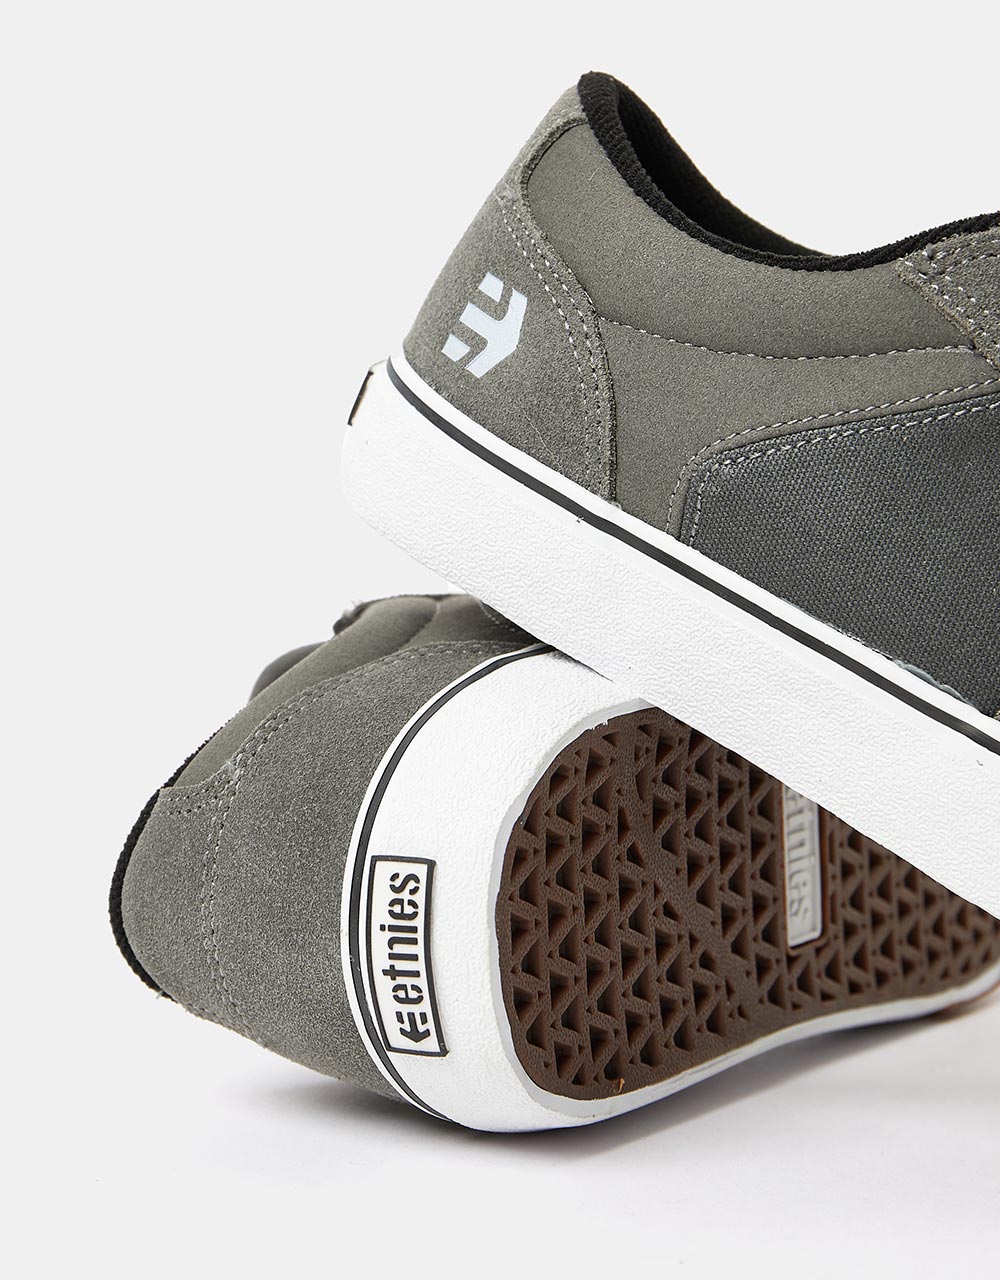 Etnies Barge LS Skate Shoes - Dark Grey/White/Gum